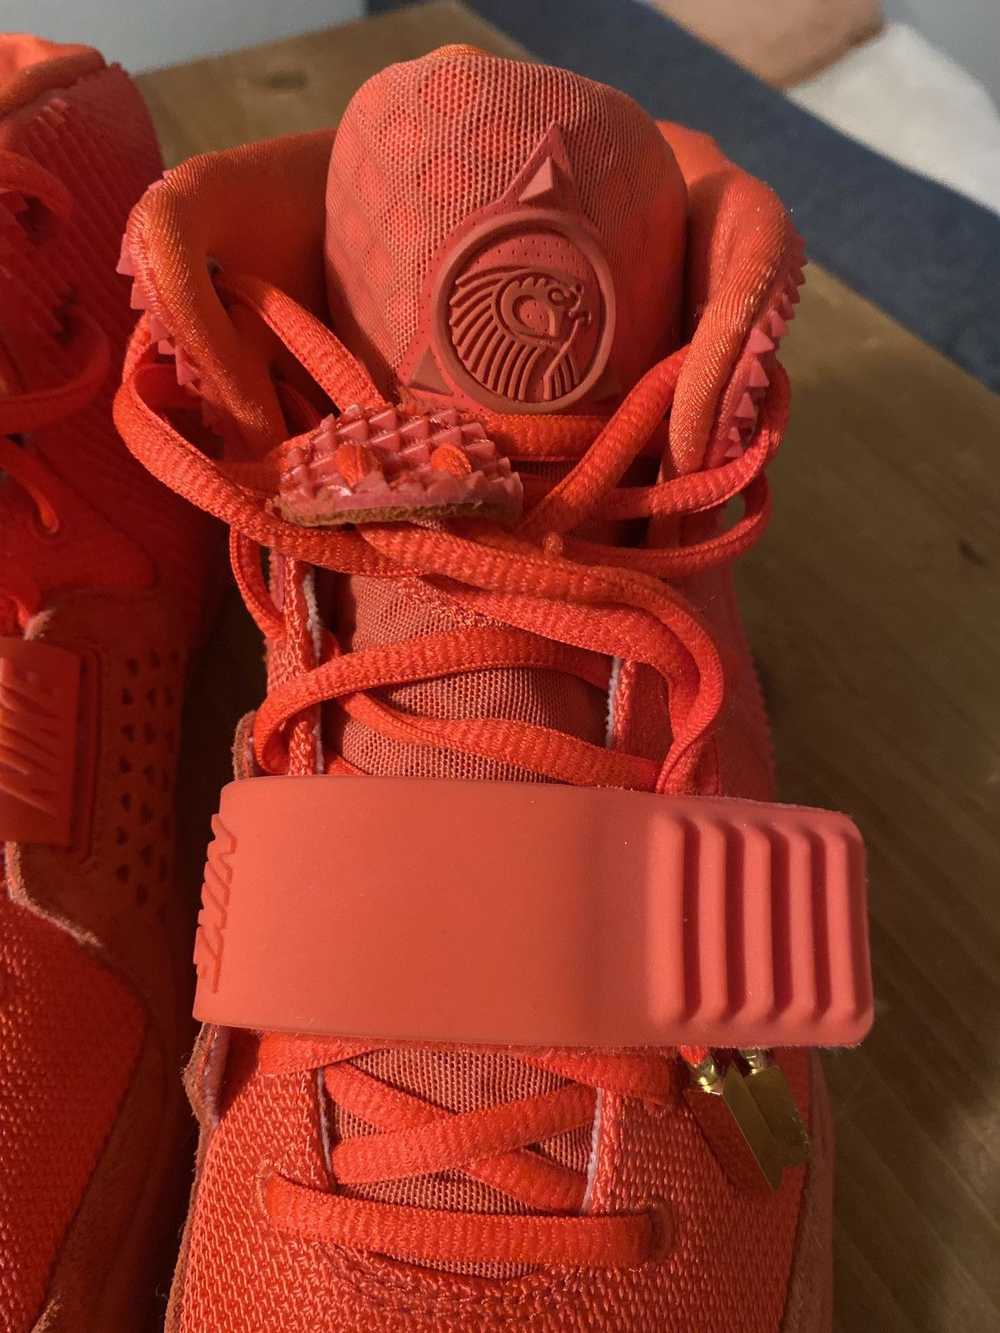 Kanye West × Nike Nike Air Yeezy 2 “Red October” - image 6